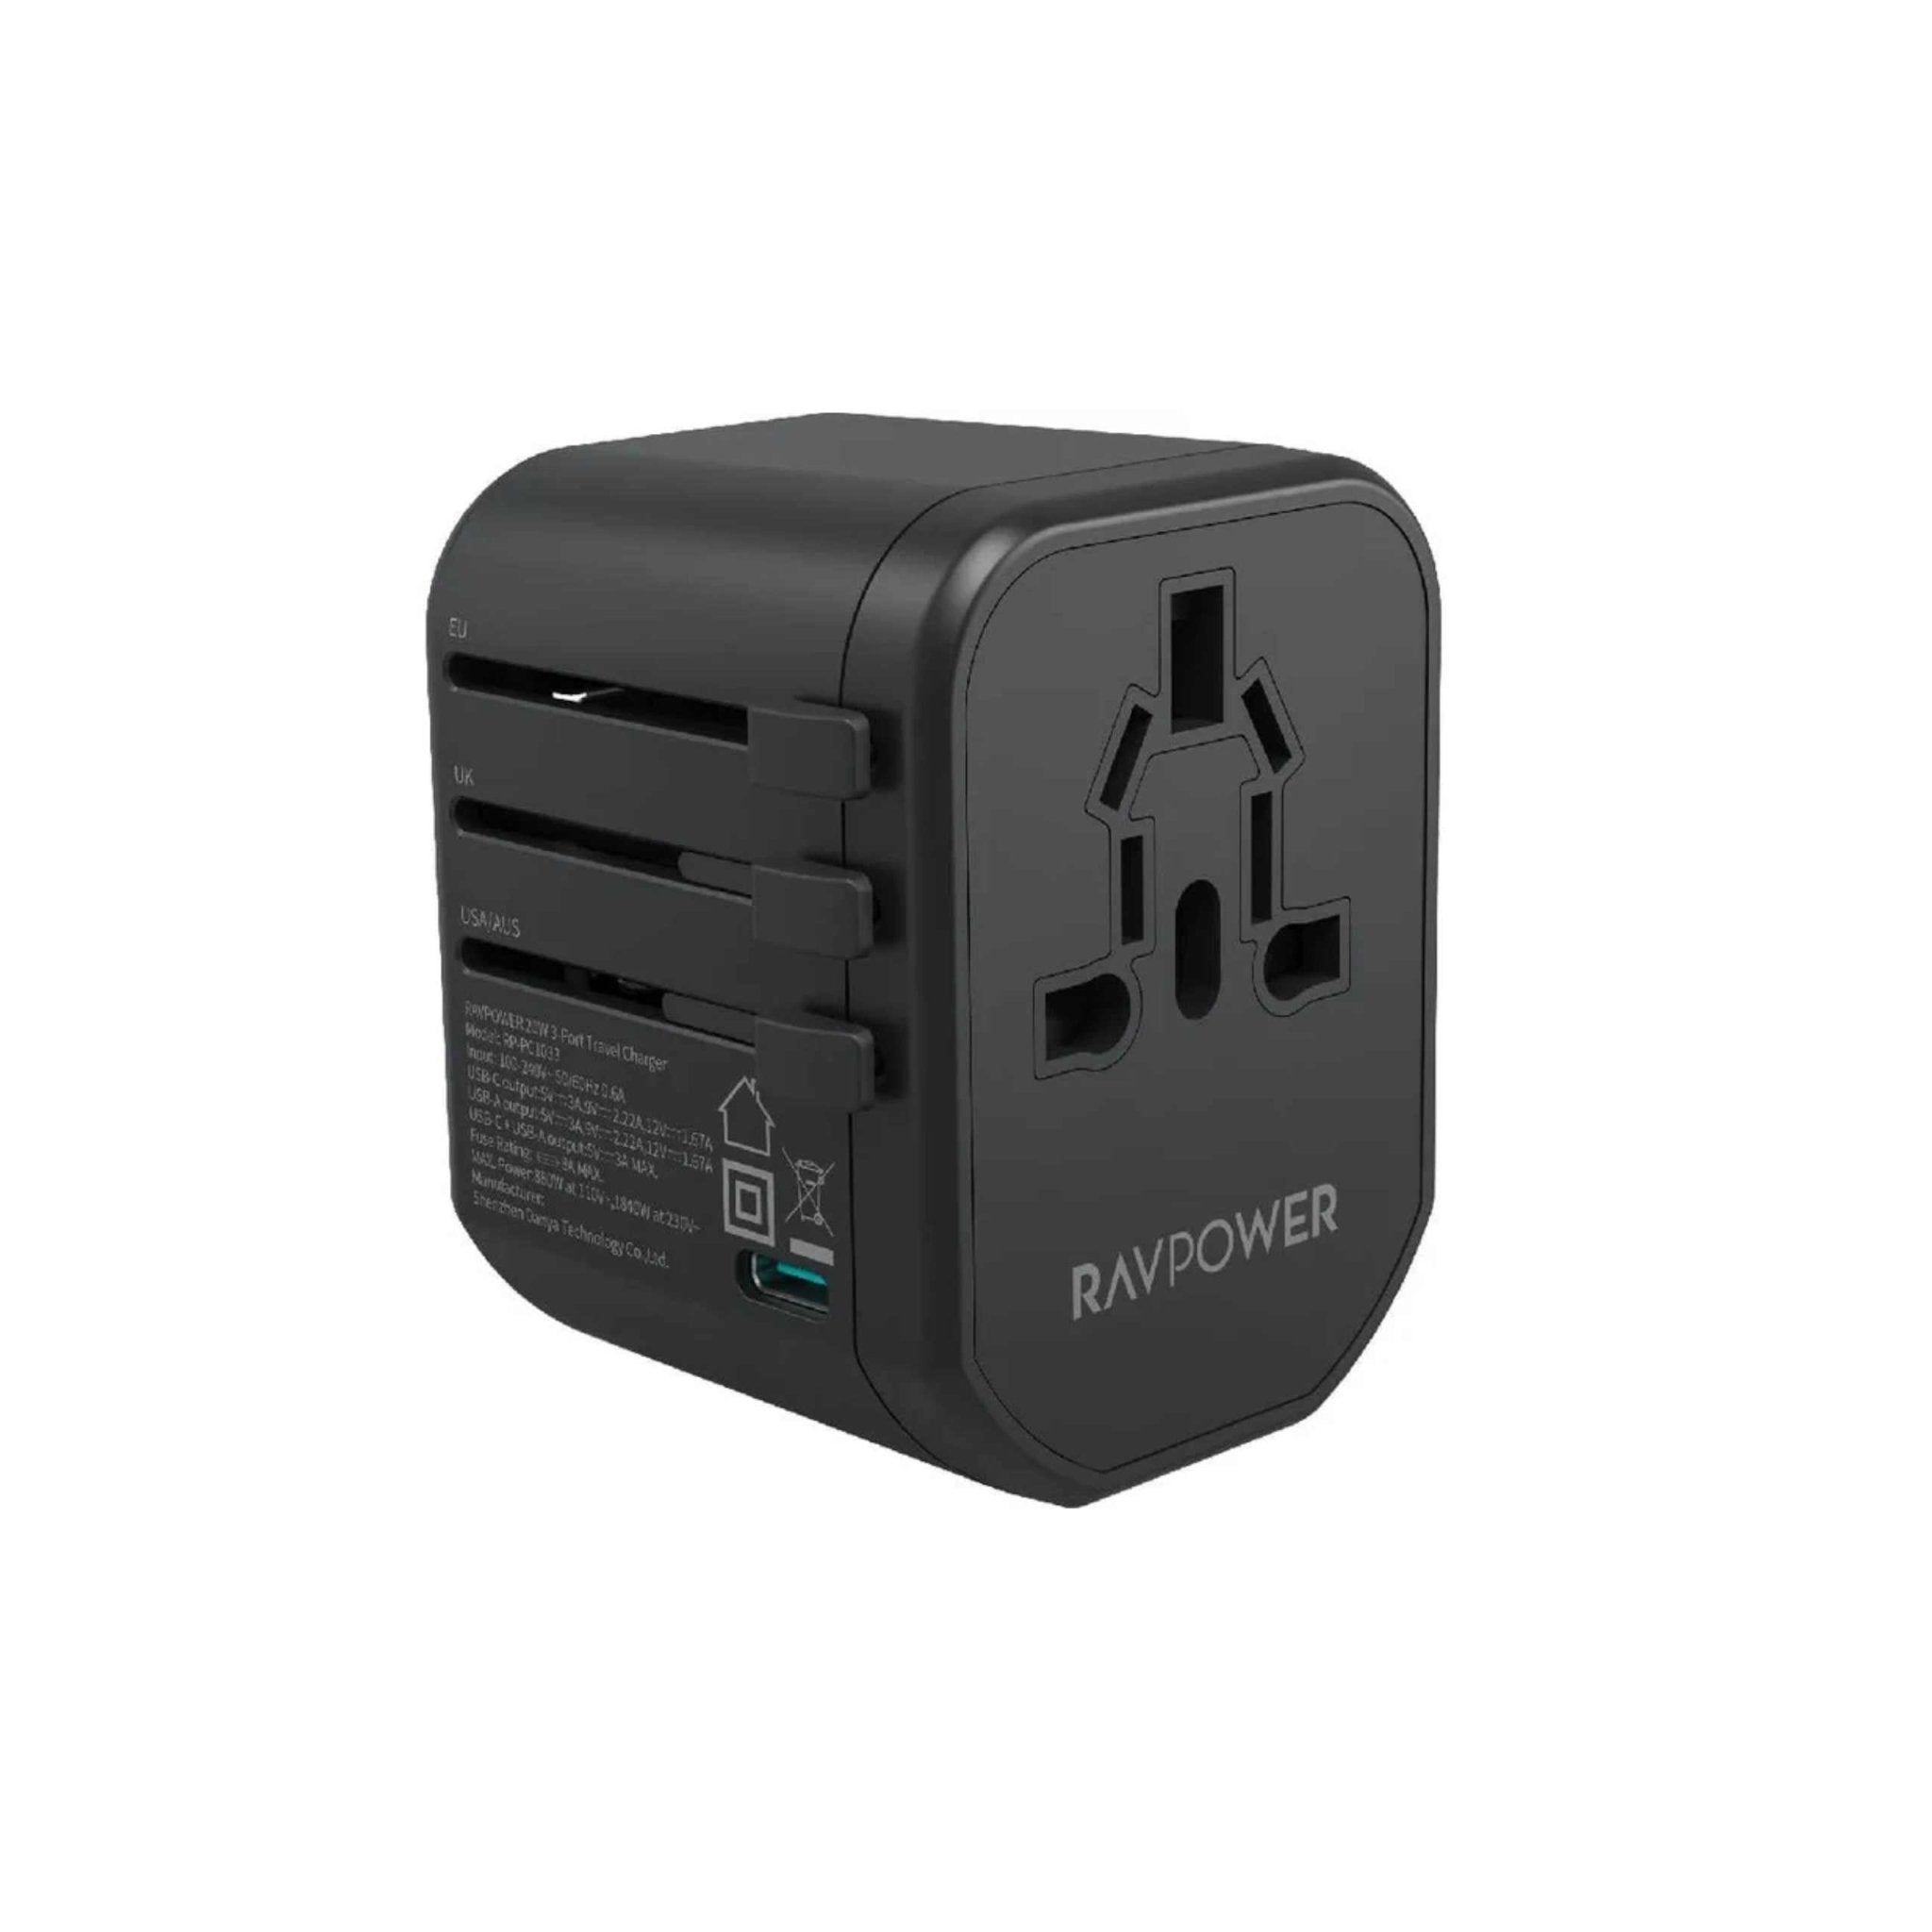 Ravpower 20W 3-Port Travel charger - Black